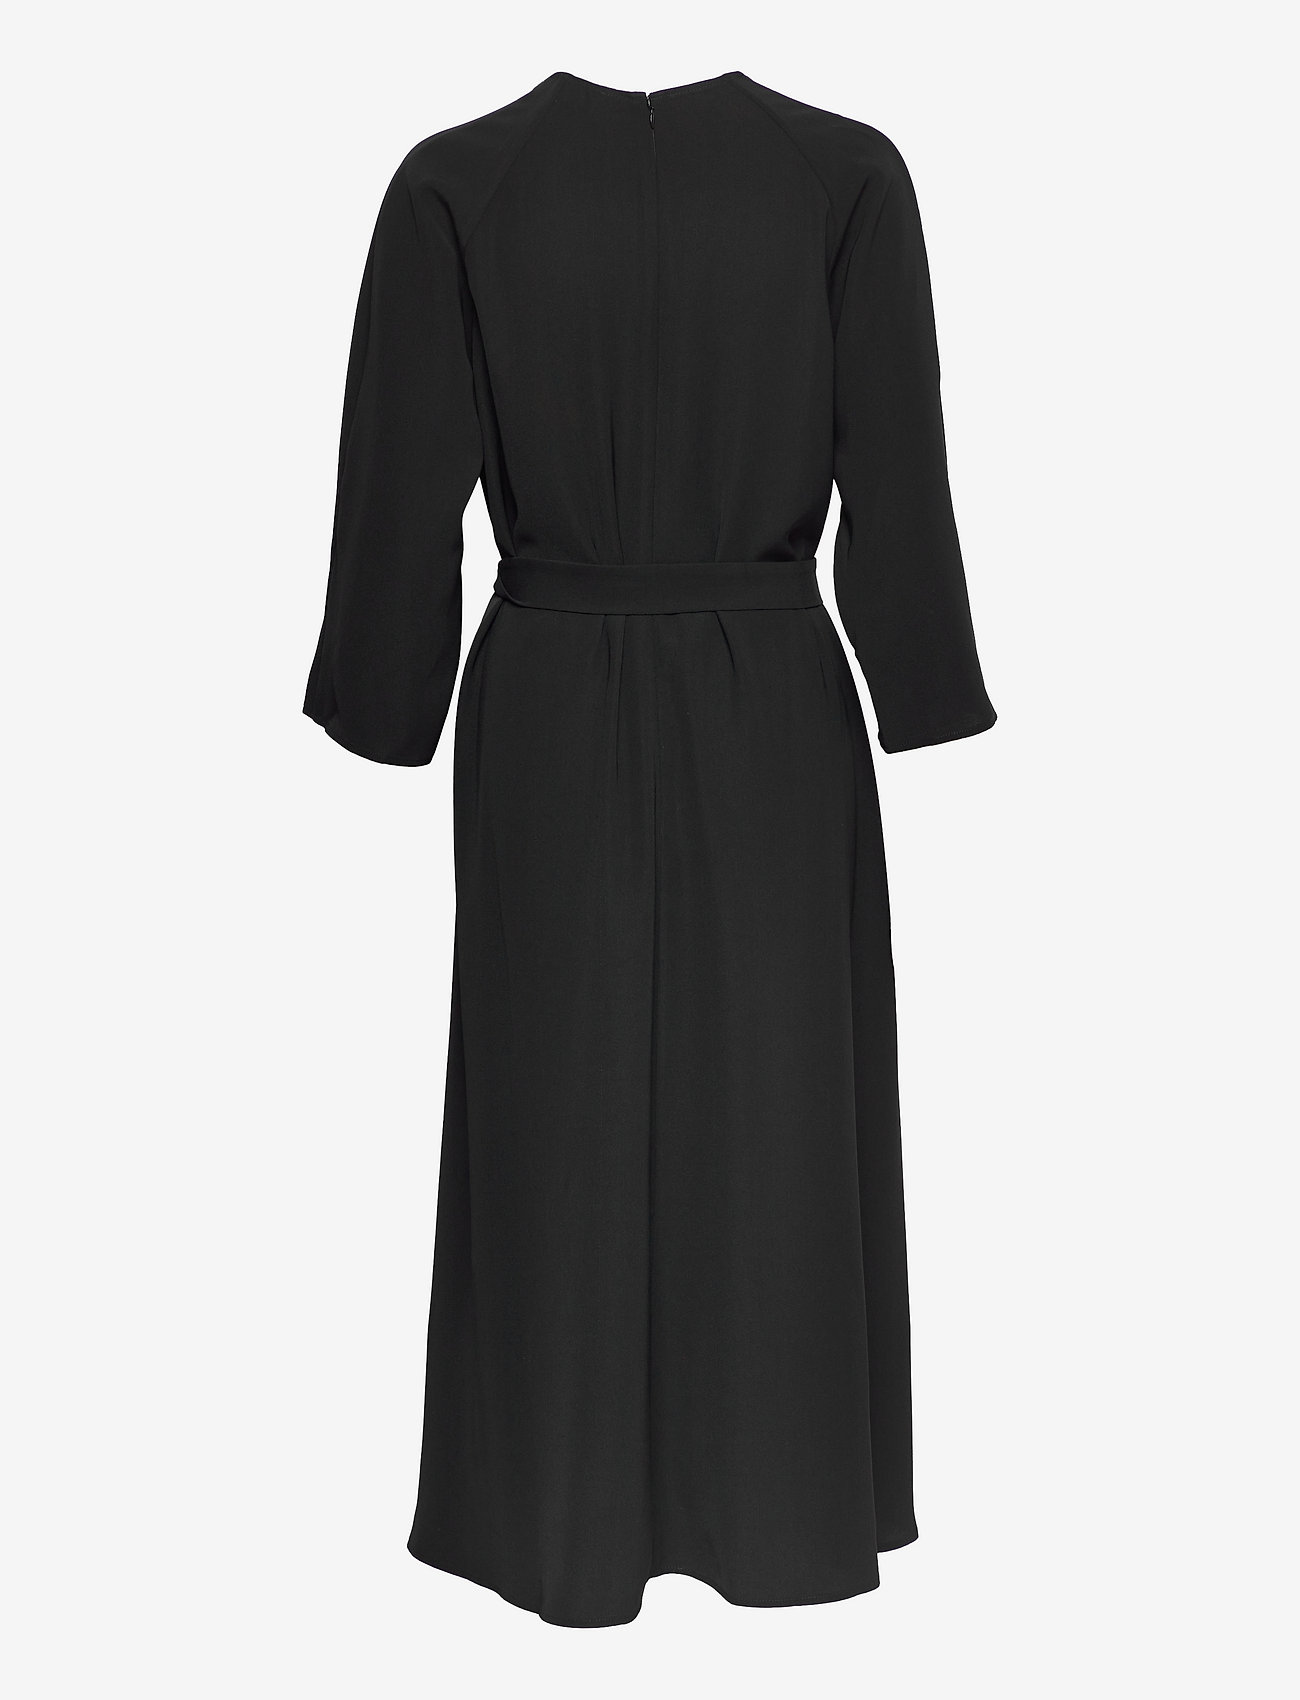 IVY OAK - SCAROLA FLARED OPEN BACK DRESS MAXI LENGTH - feestelijke kleding voor outlet-prijzen - black - 1